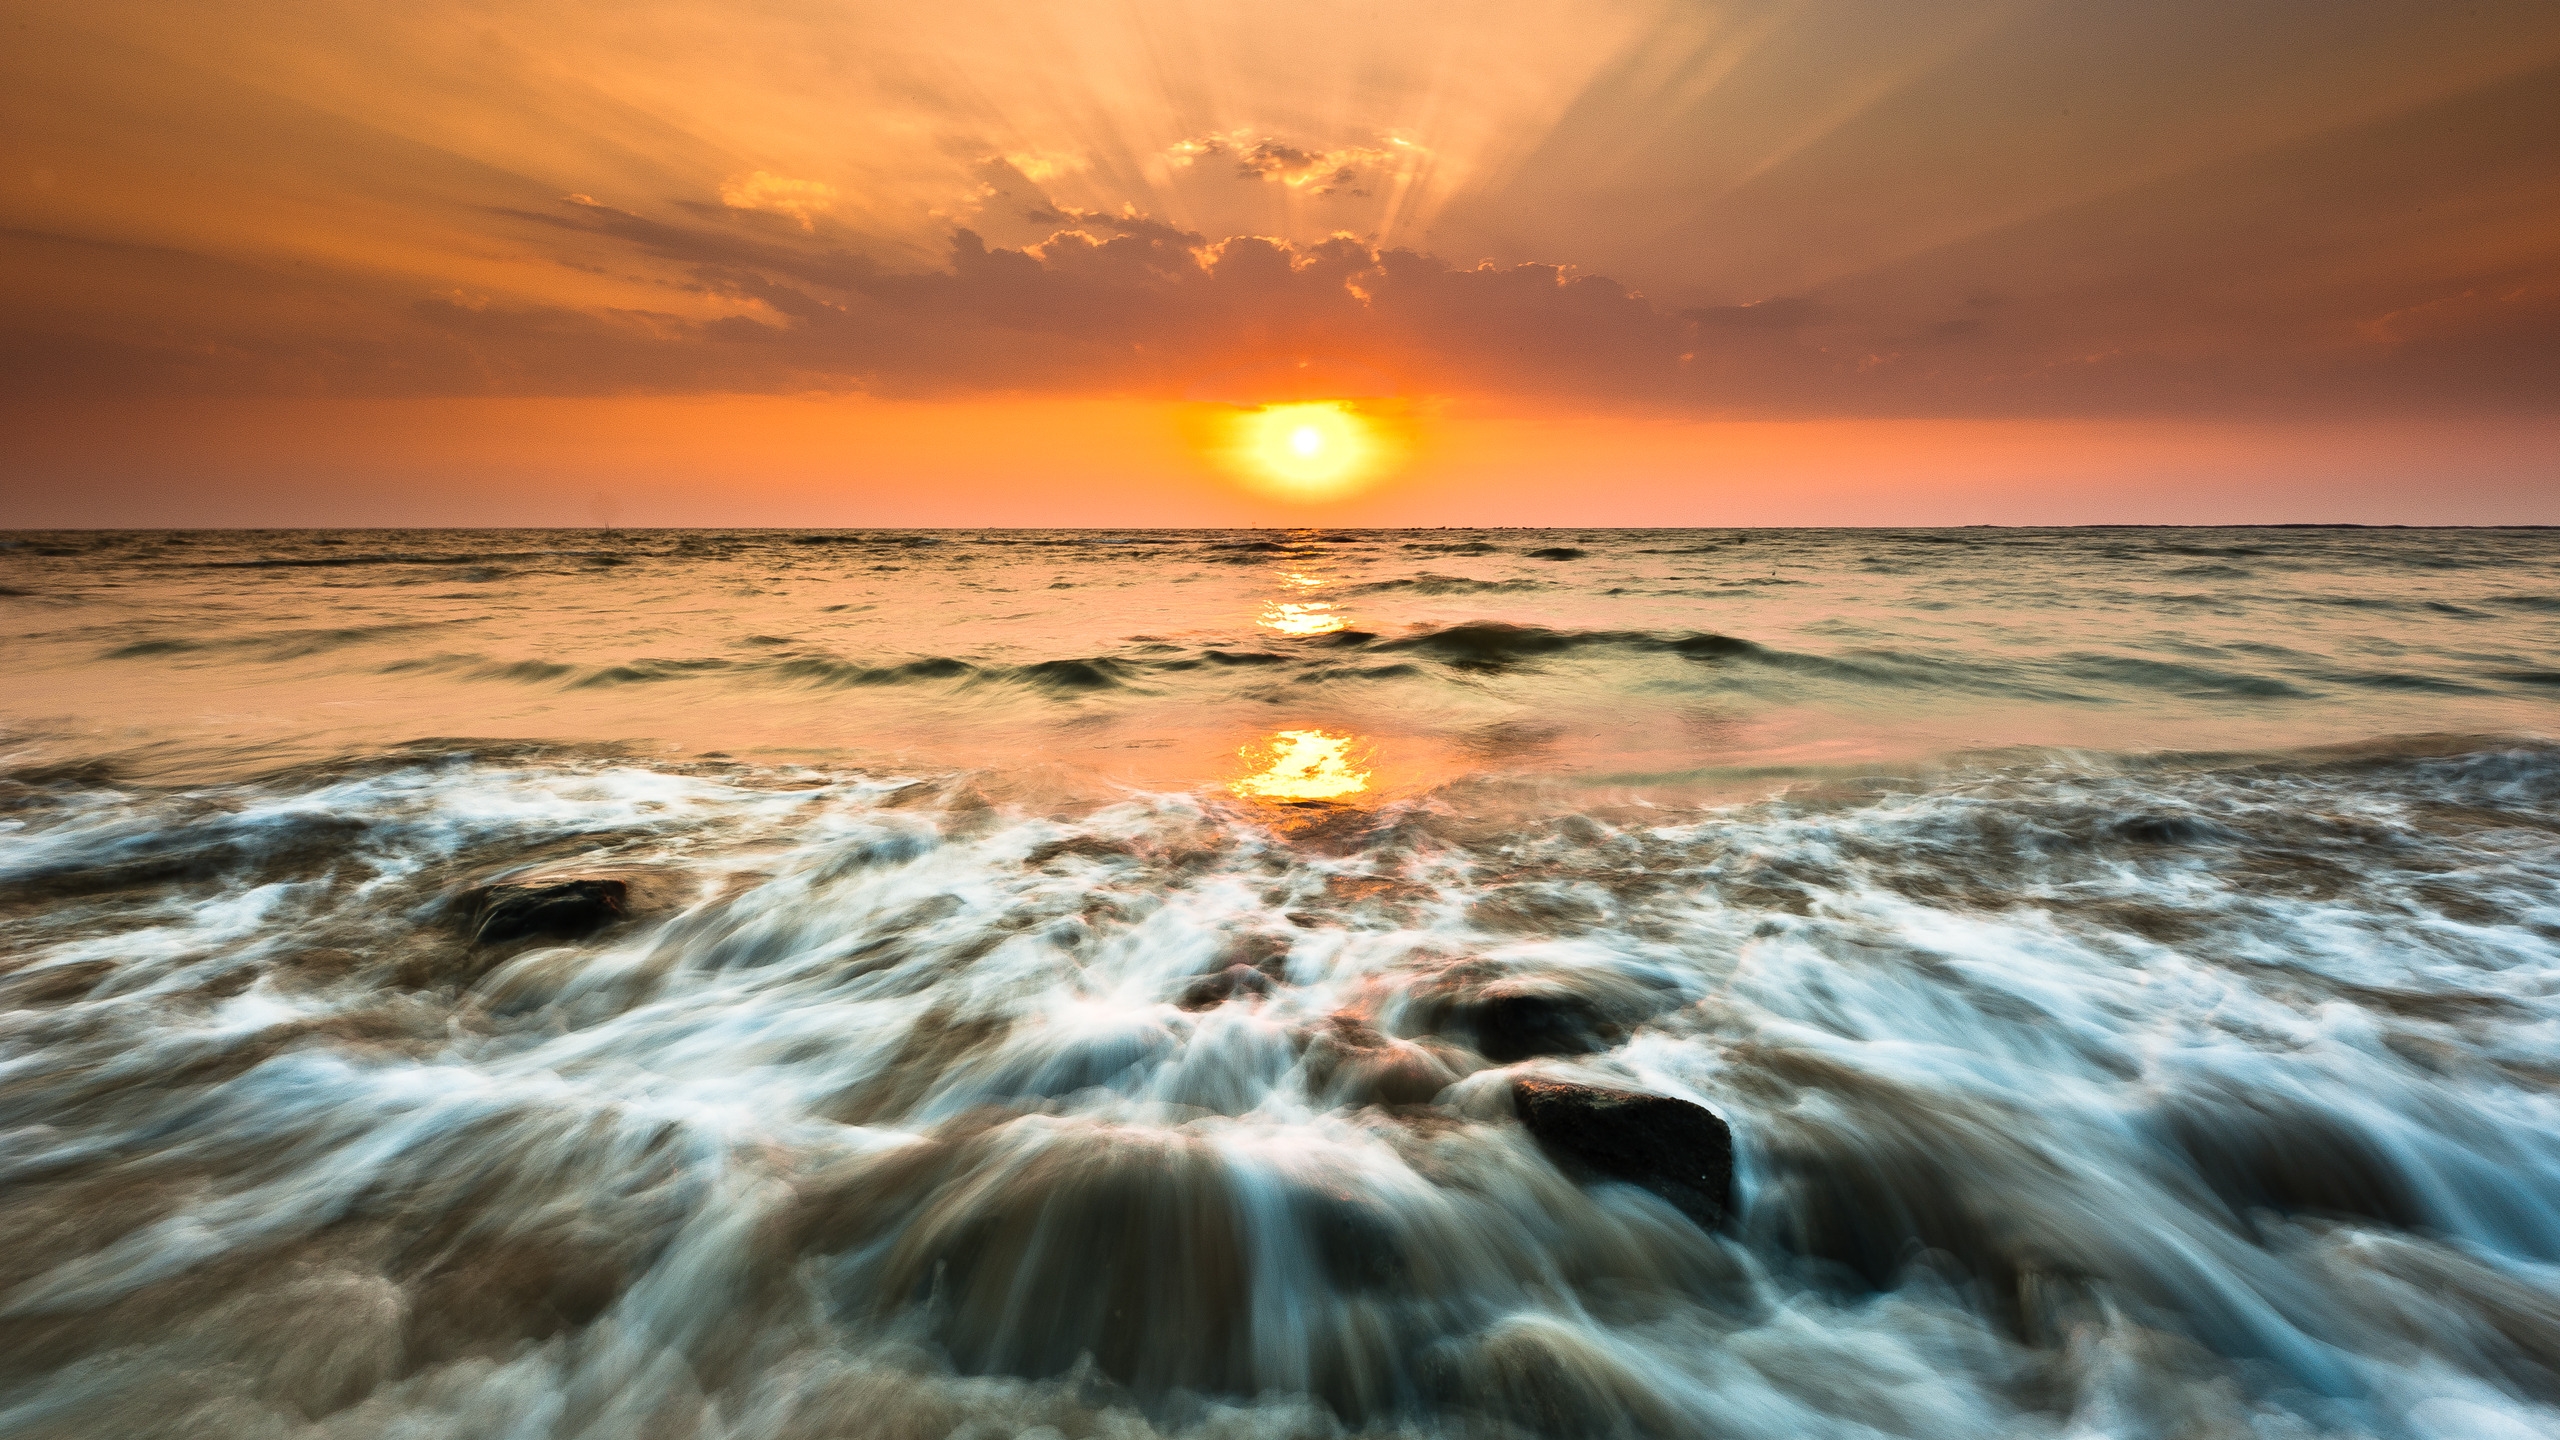 Gorai Beach Sunset for 2560x1440 HDTV resolution